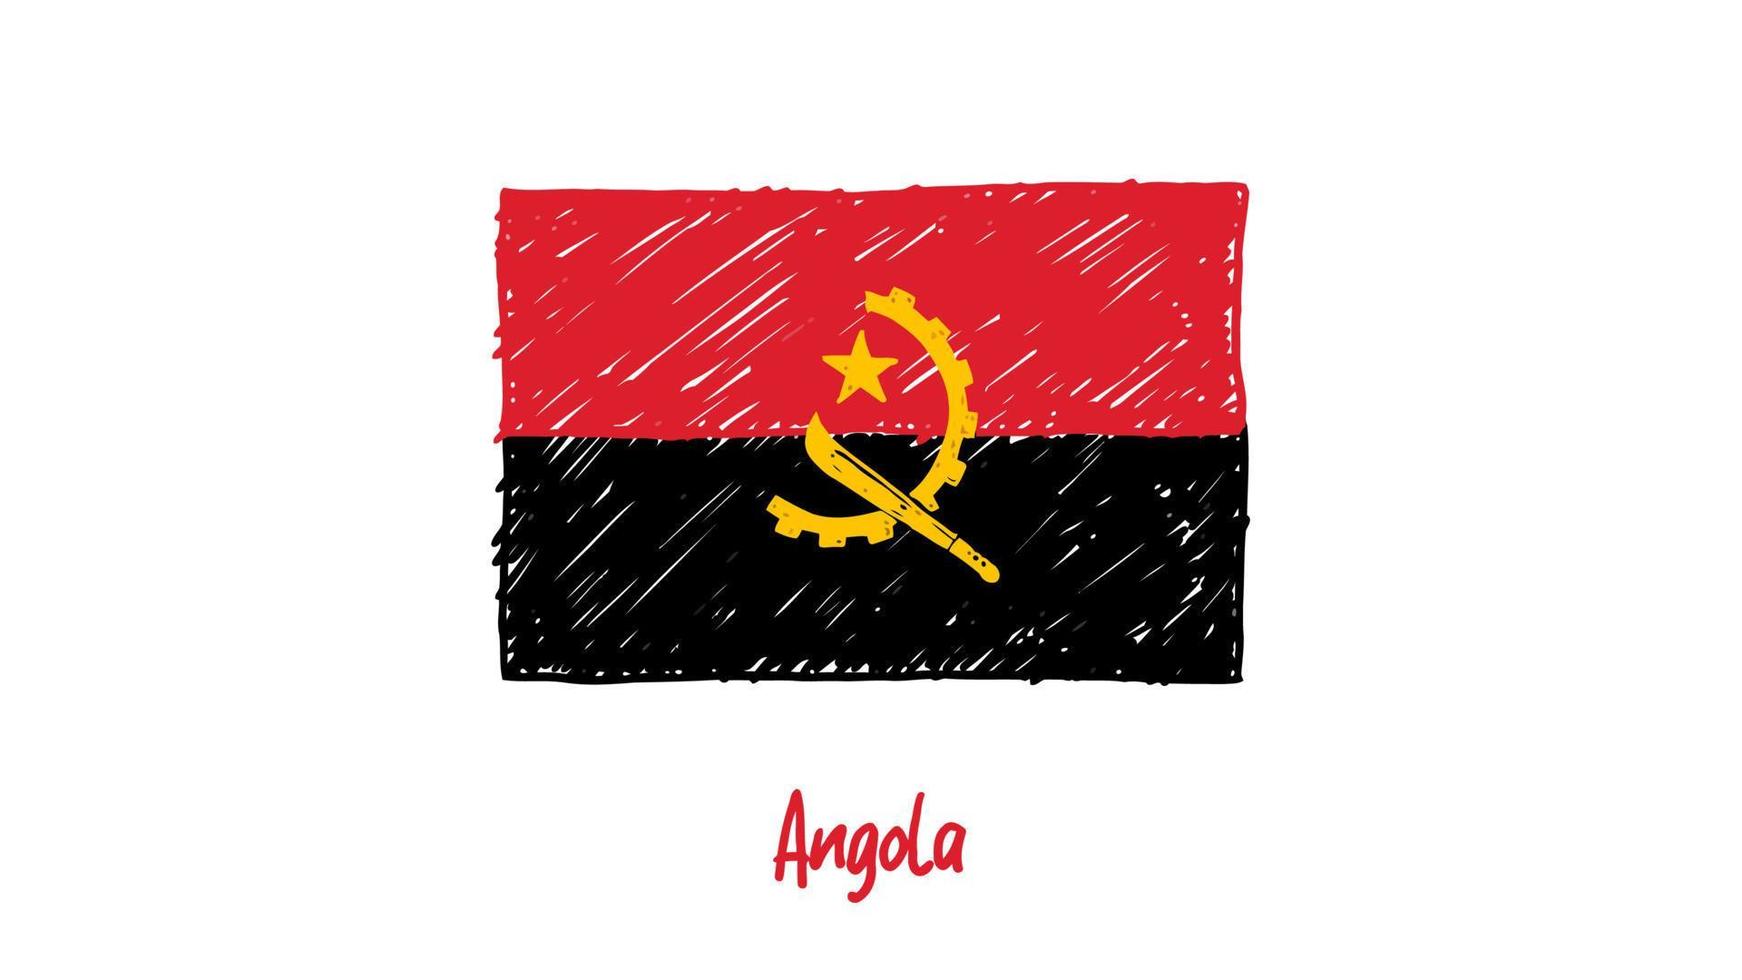 Angola nationale land vlag marker of potlood schets illustratie vector